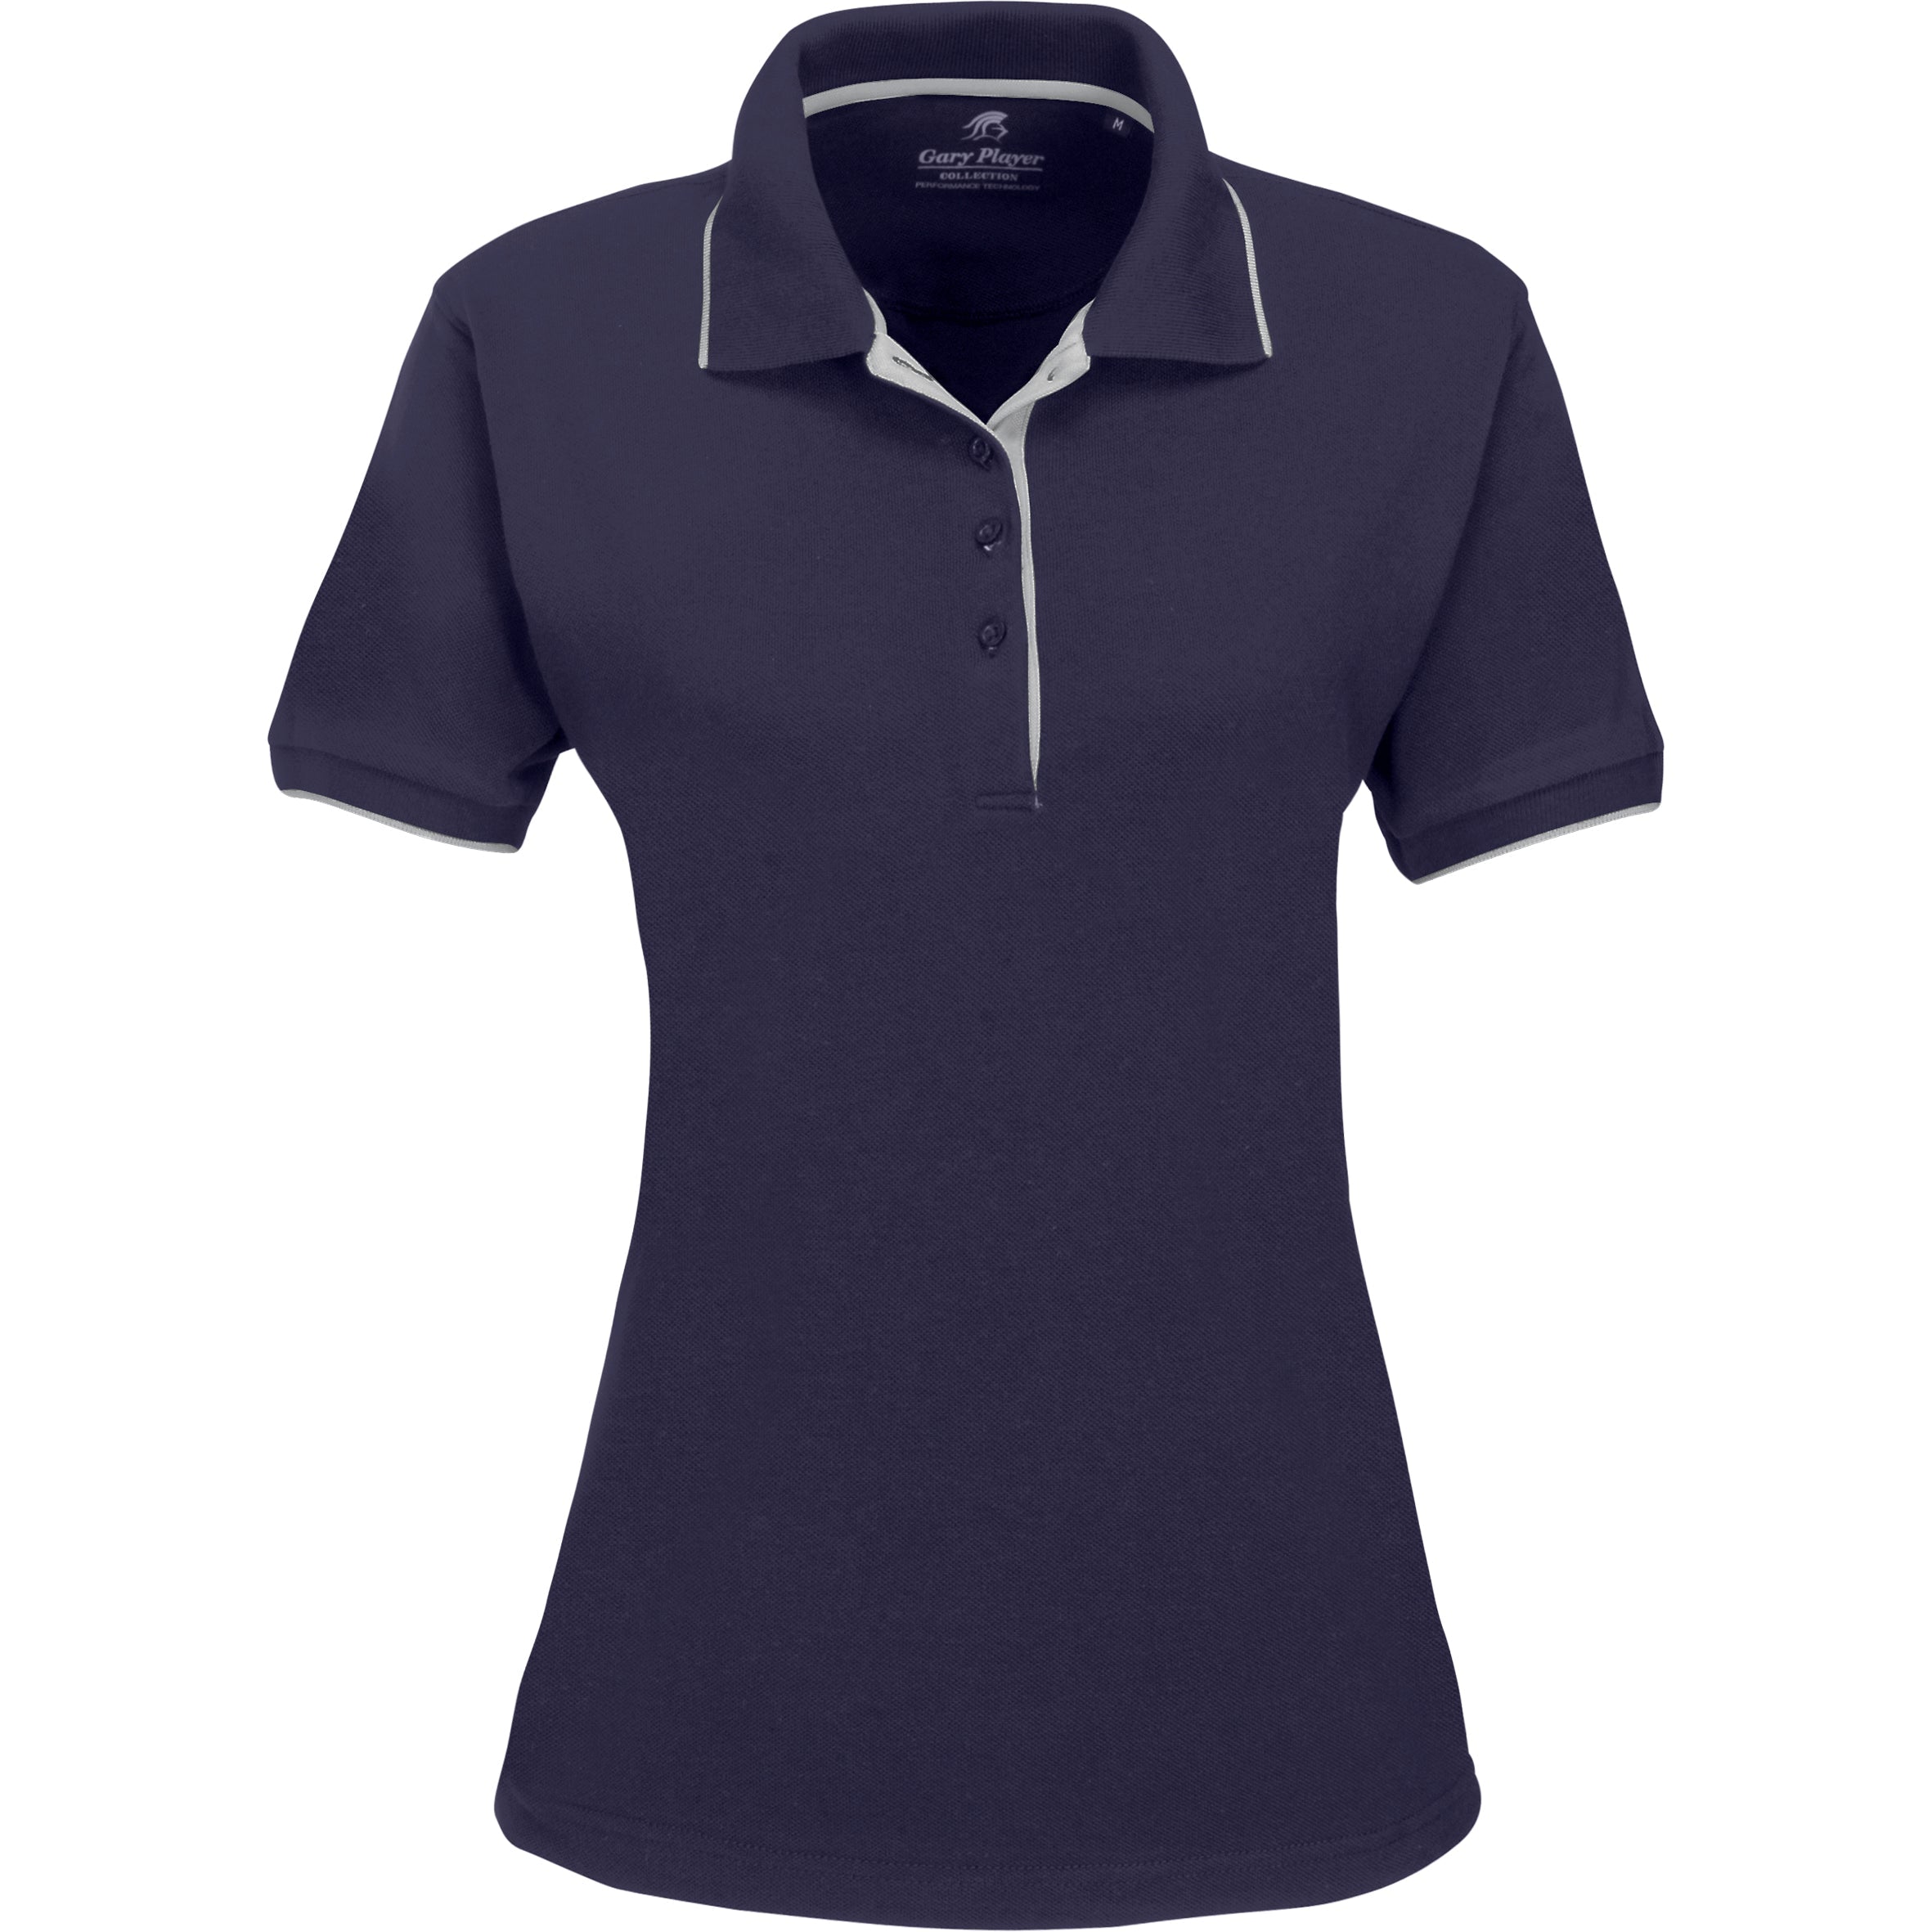 Ladies Wentworth Golf Shirt - Grey Only-L-Navy-N